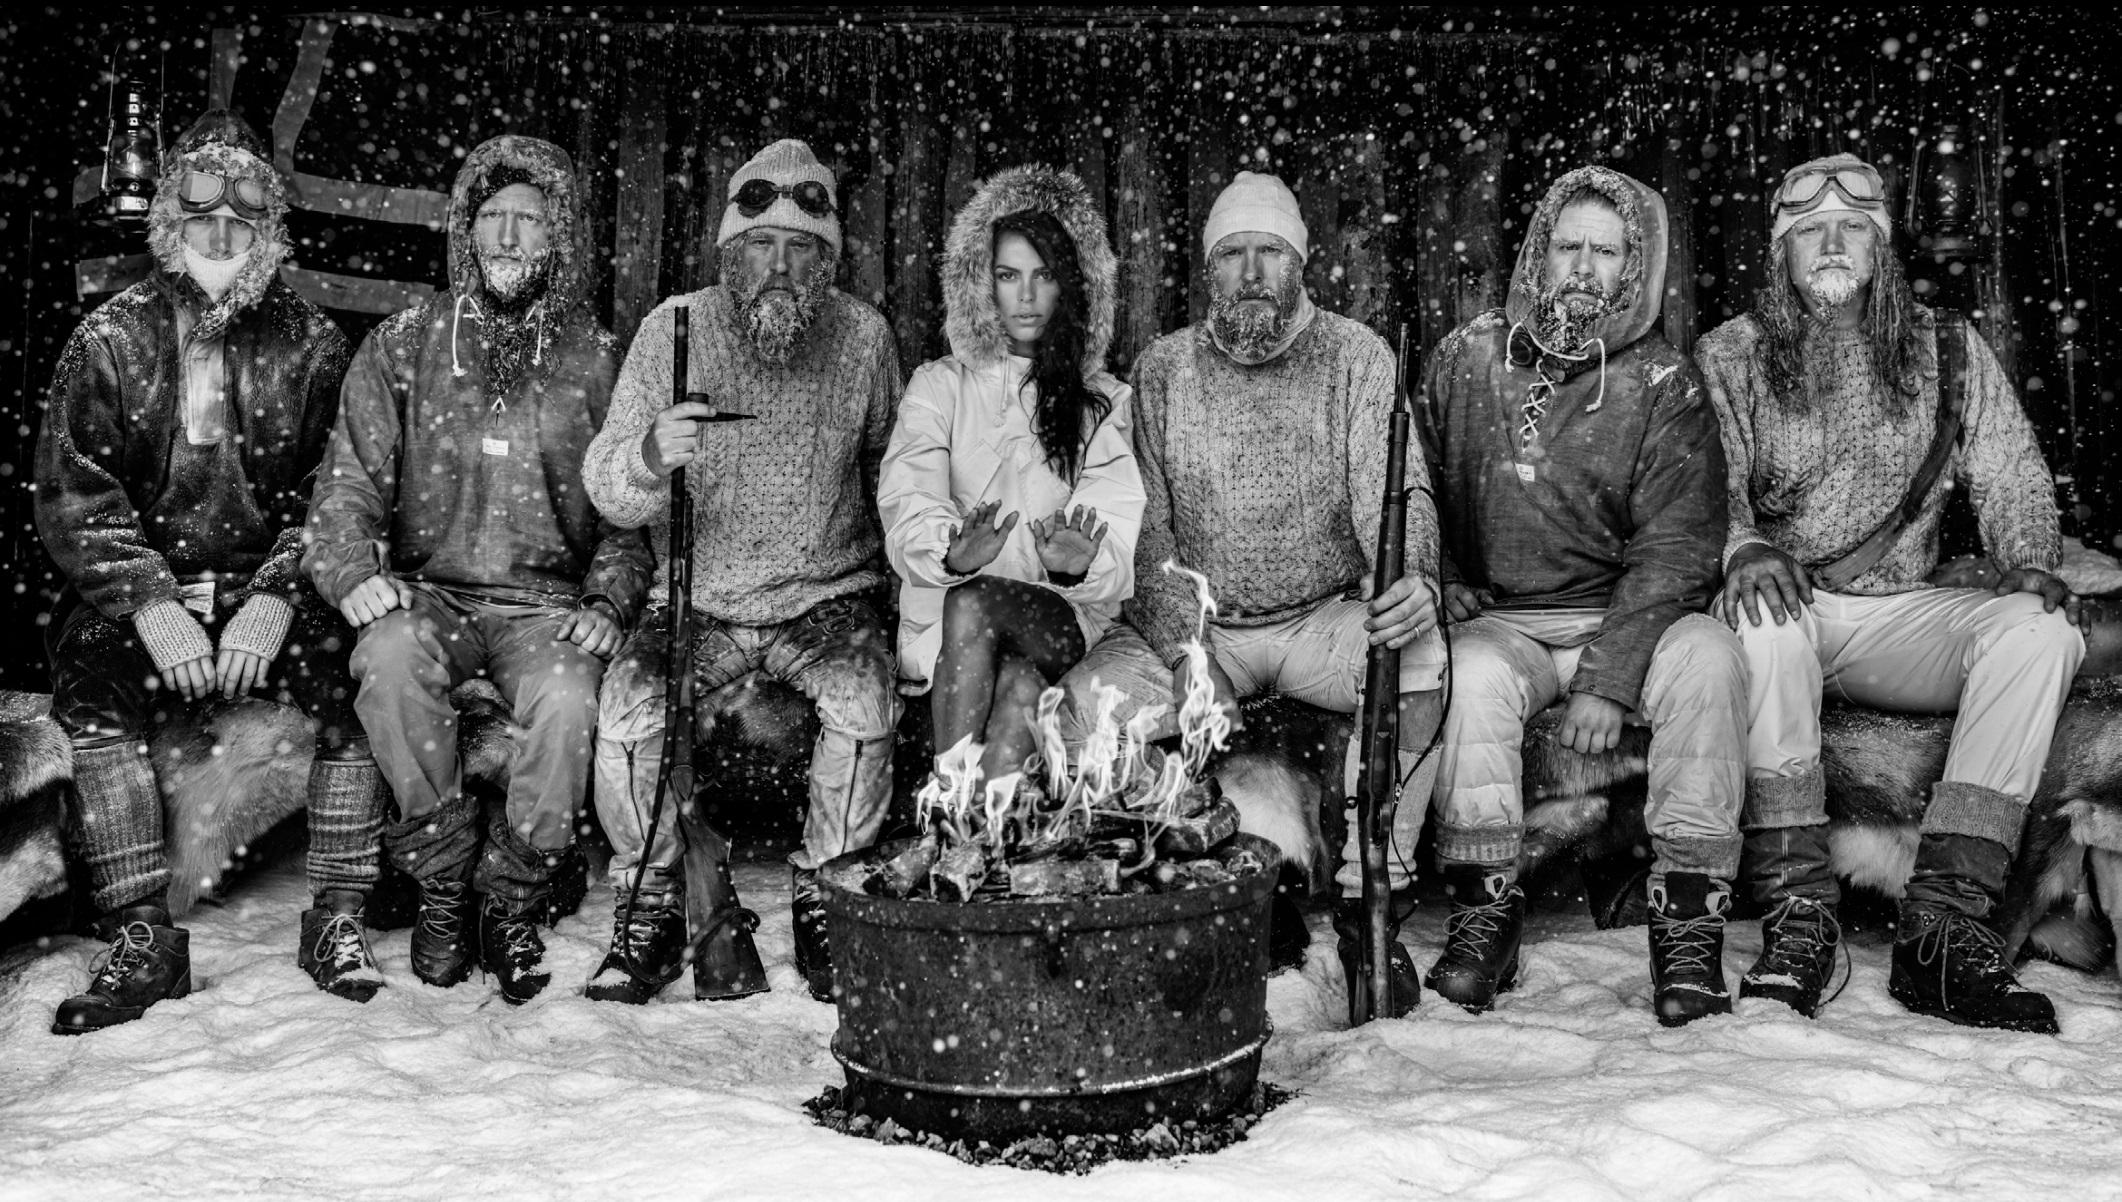 David Yarrow Figurative Photograph - Ice Ice Baby - Model Brooks Nader with Polar Explorers Sitting Around Fireplace